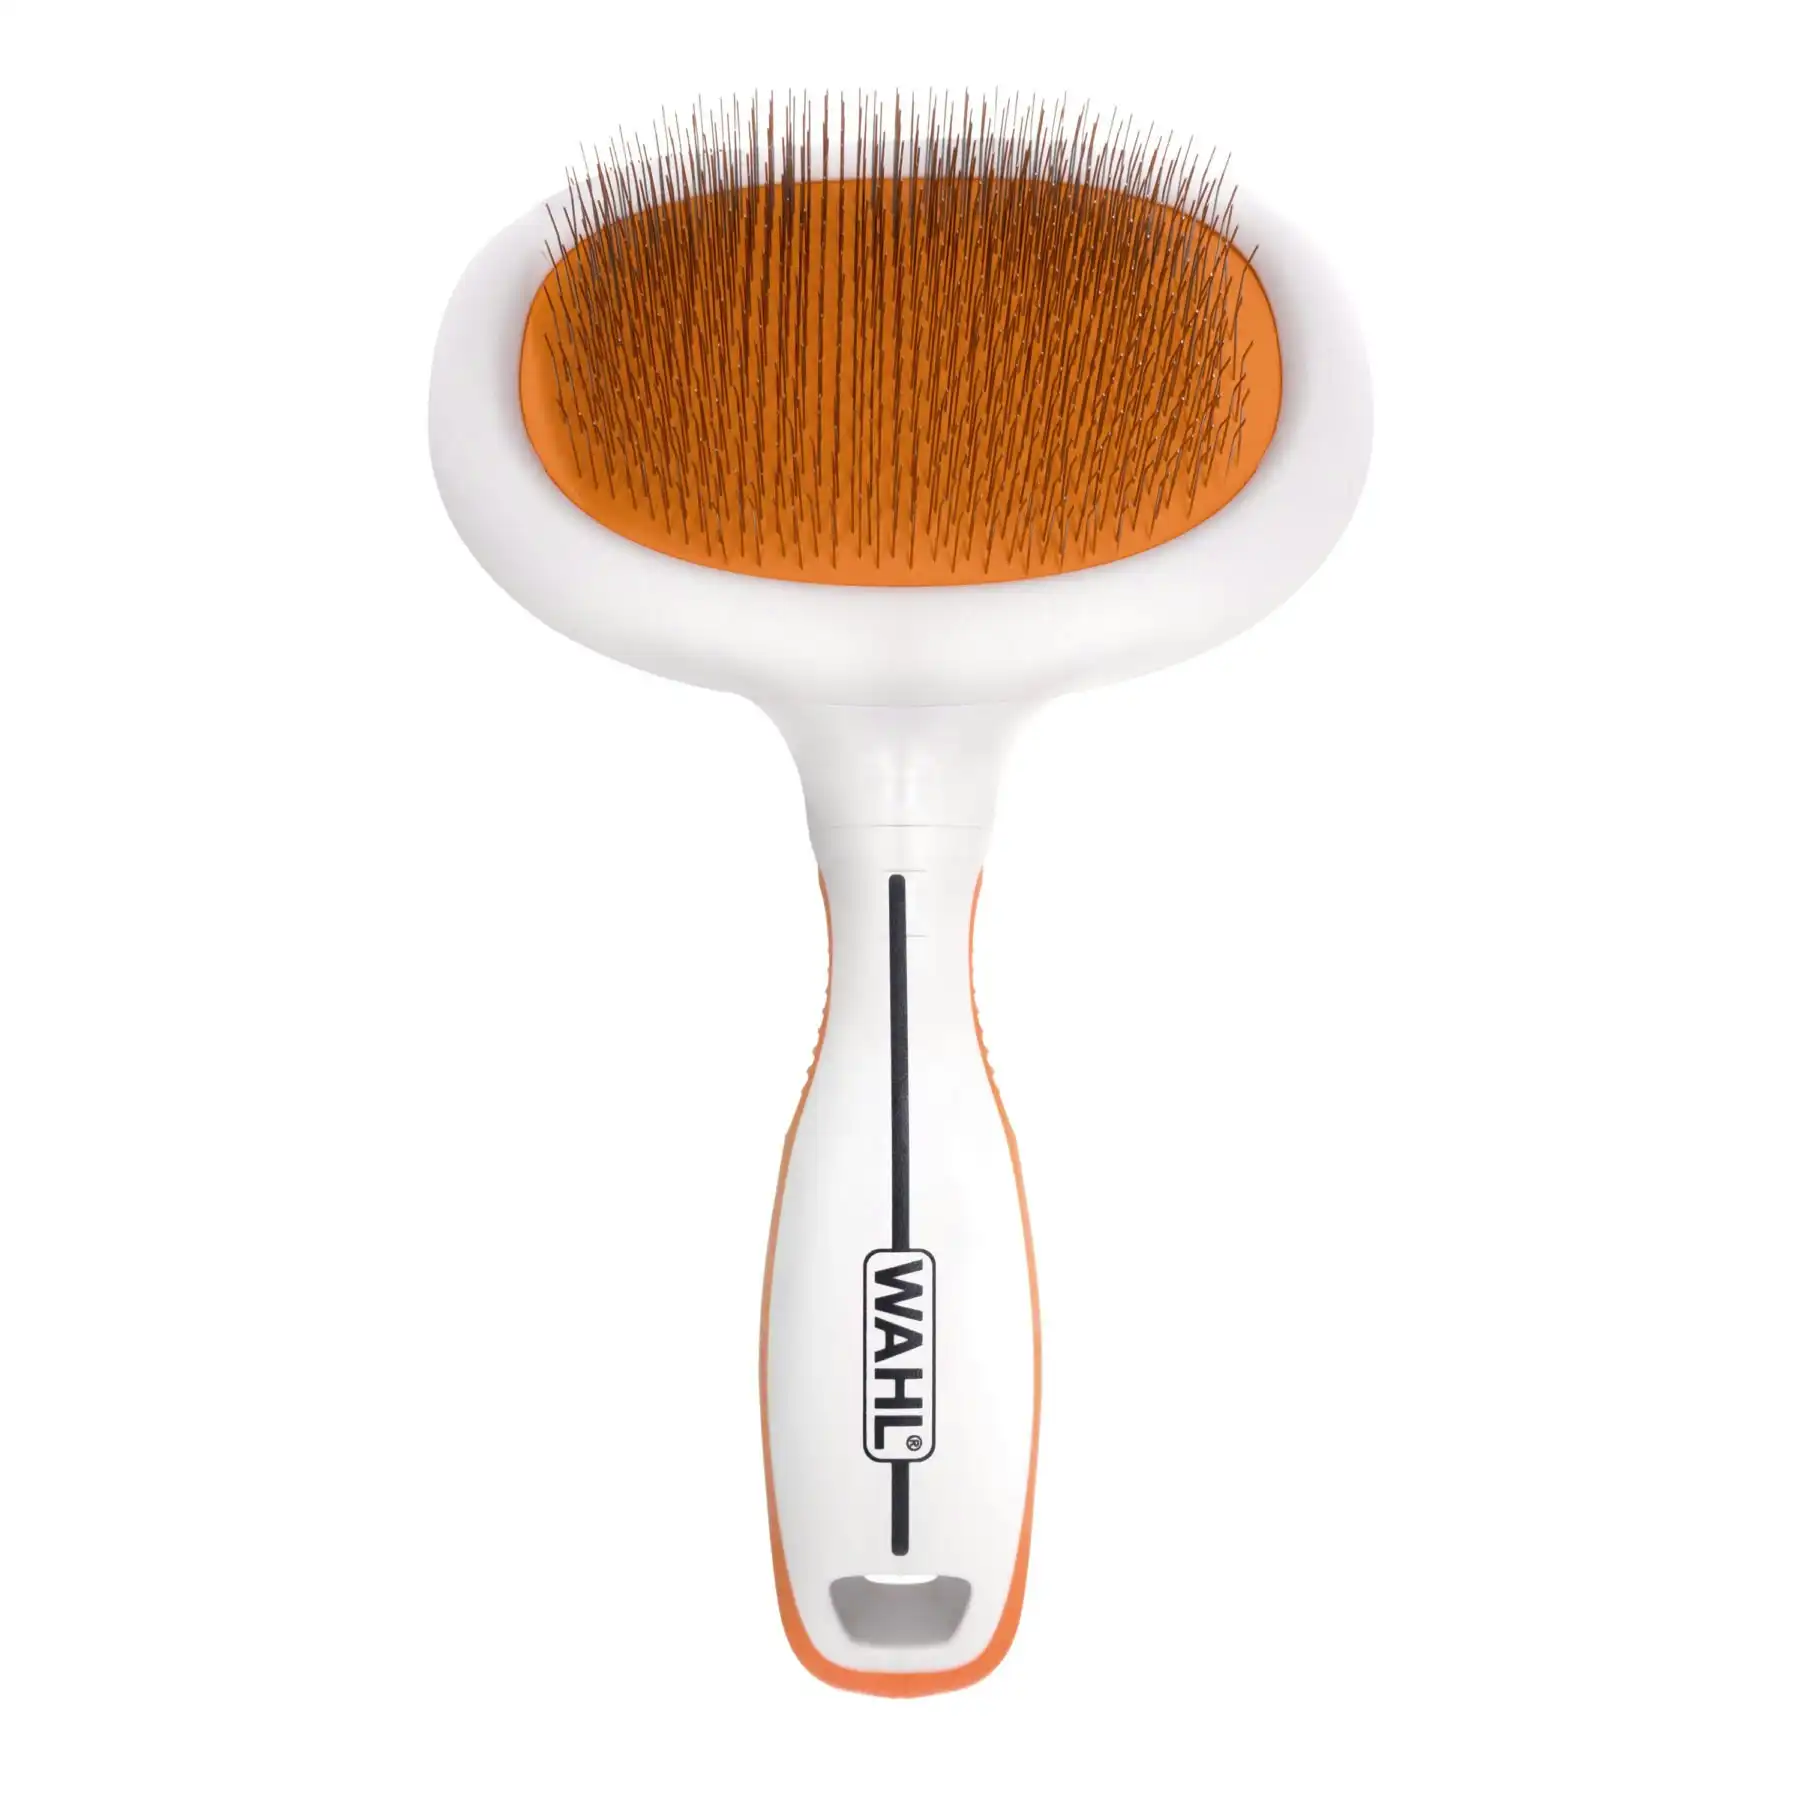 Wahl Orange and White Slicker Brush - Large